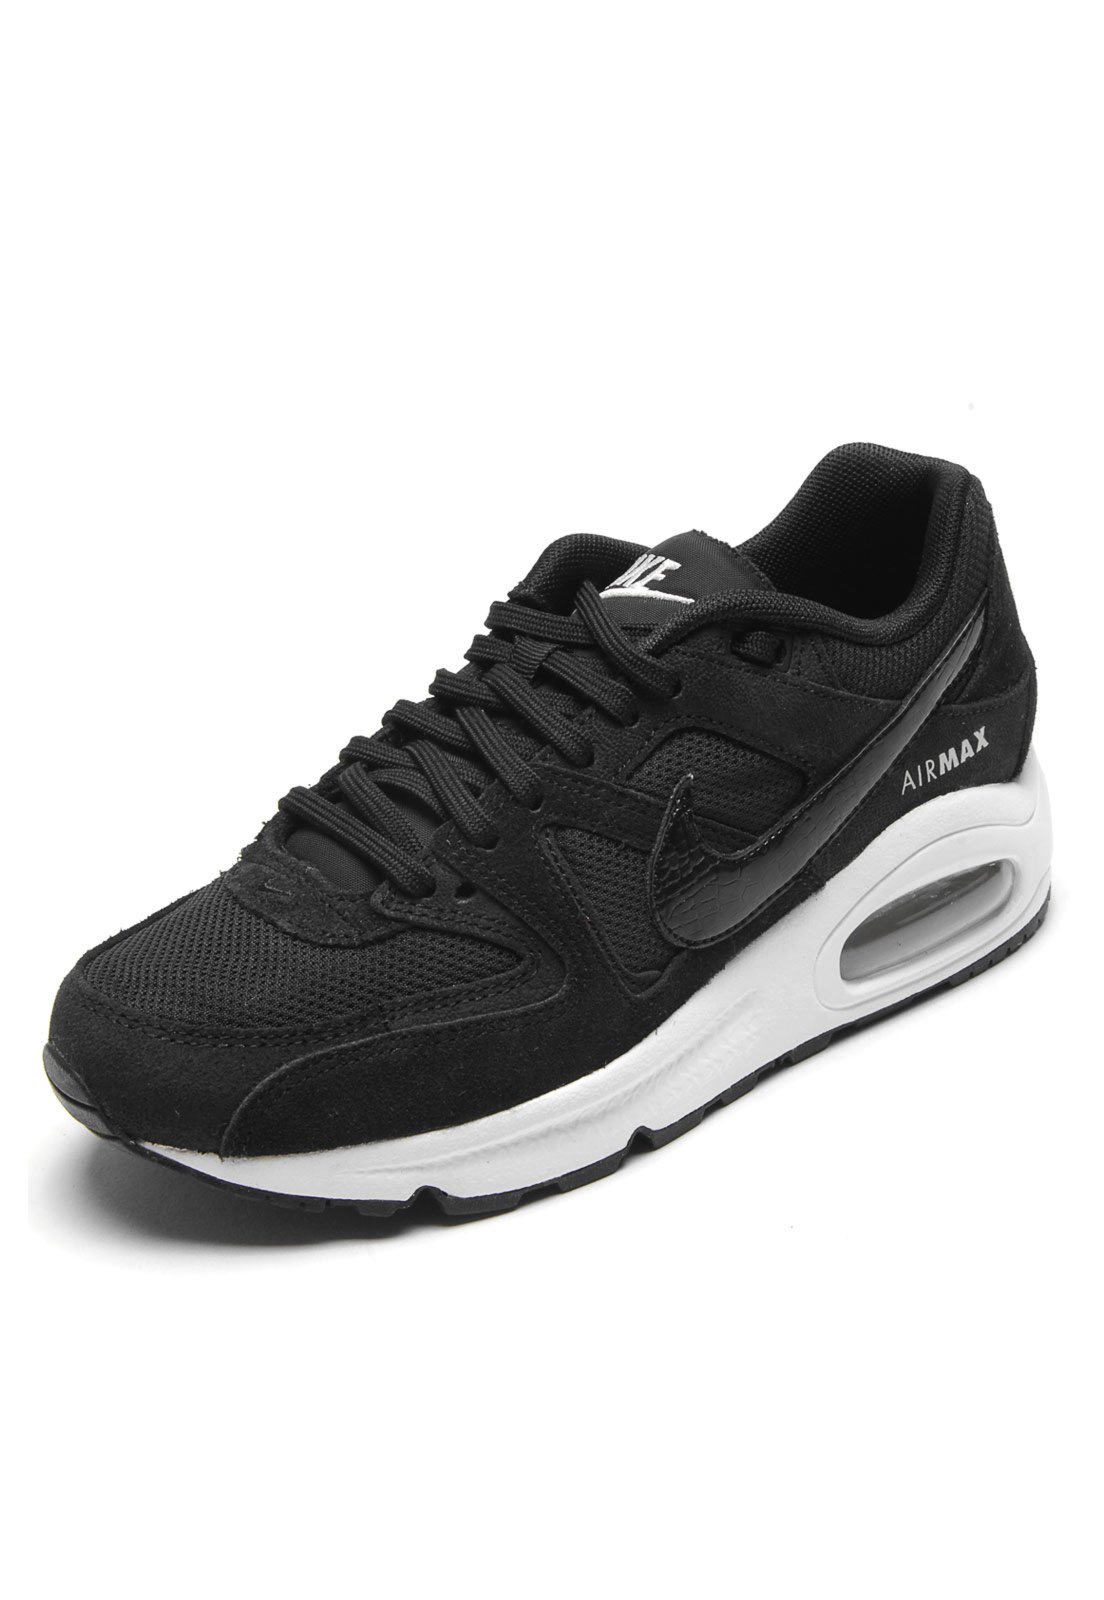 Tênis Nike Sportswear Air Max Command Preto/Branco - Compre Agora